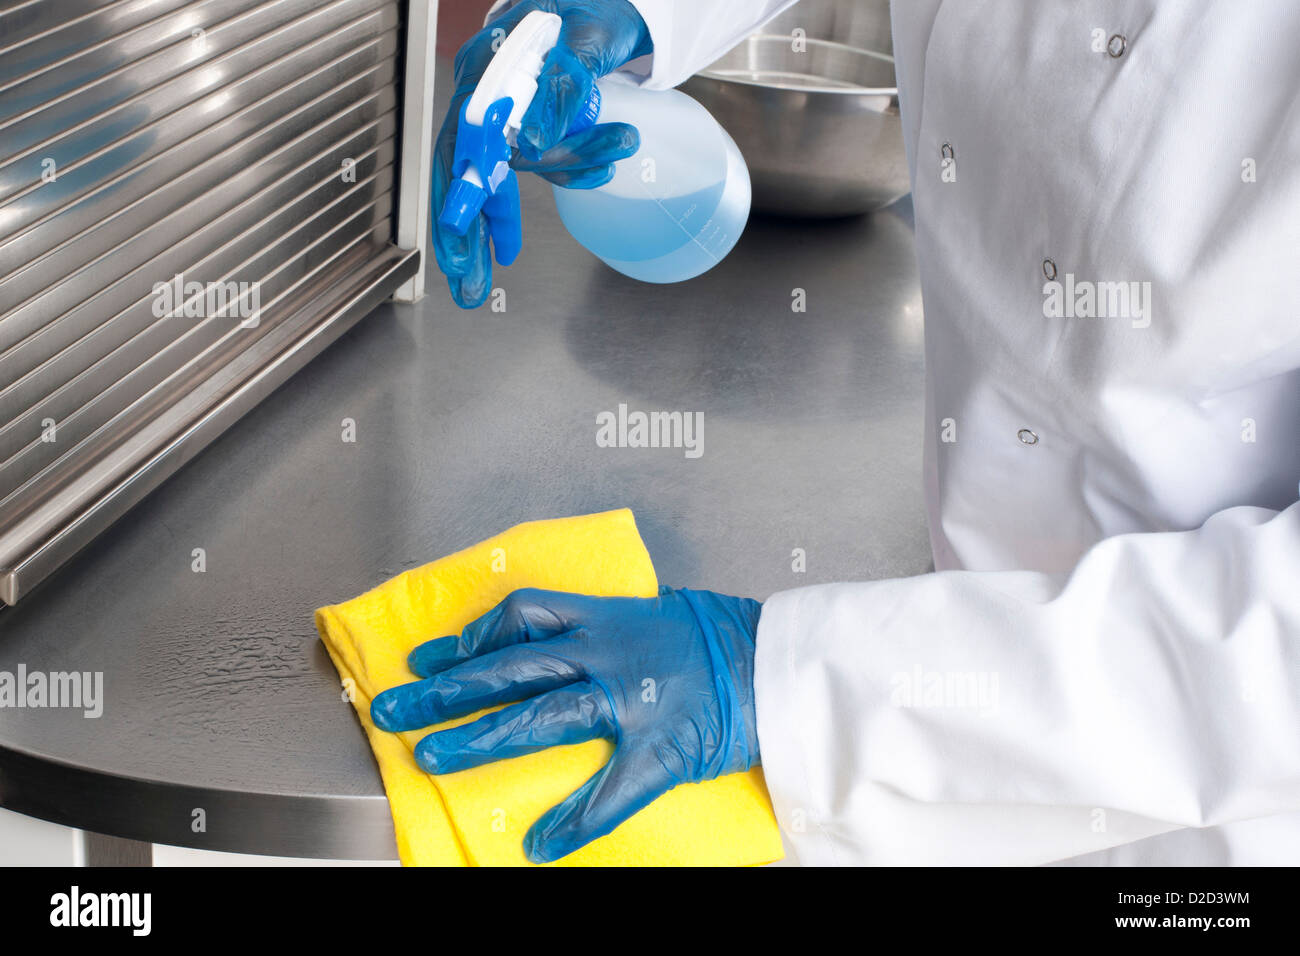 MODEL RELEASED Kitchen hygiene Stock Photo